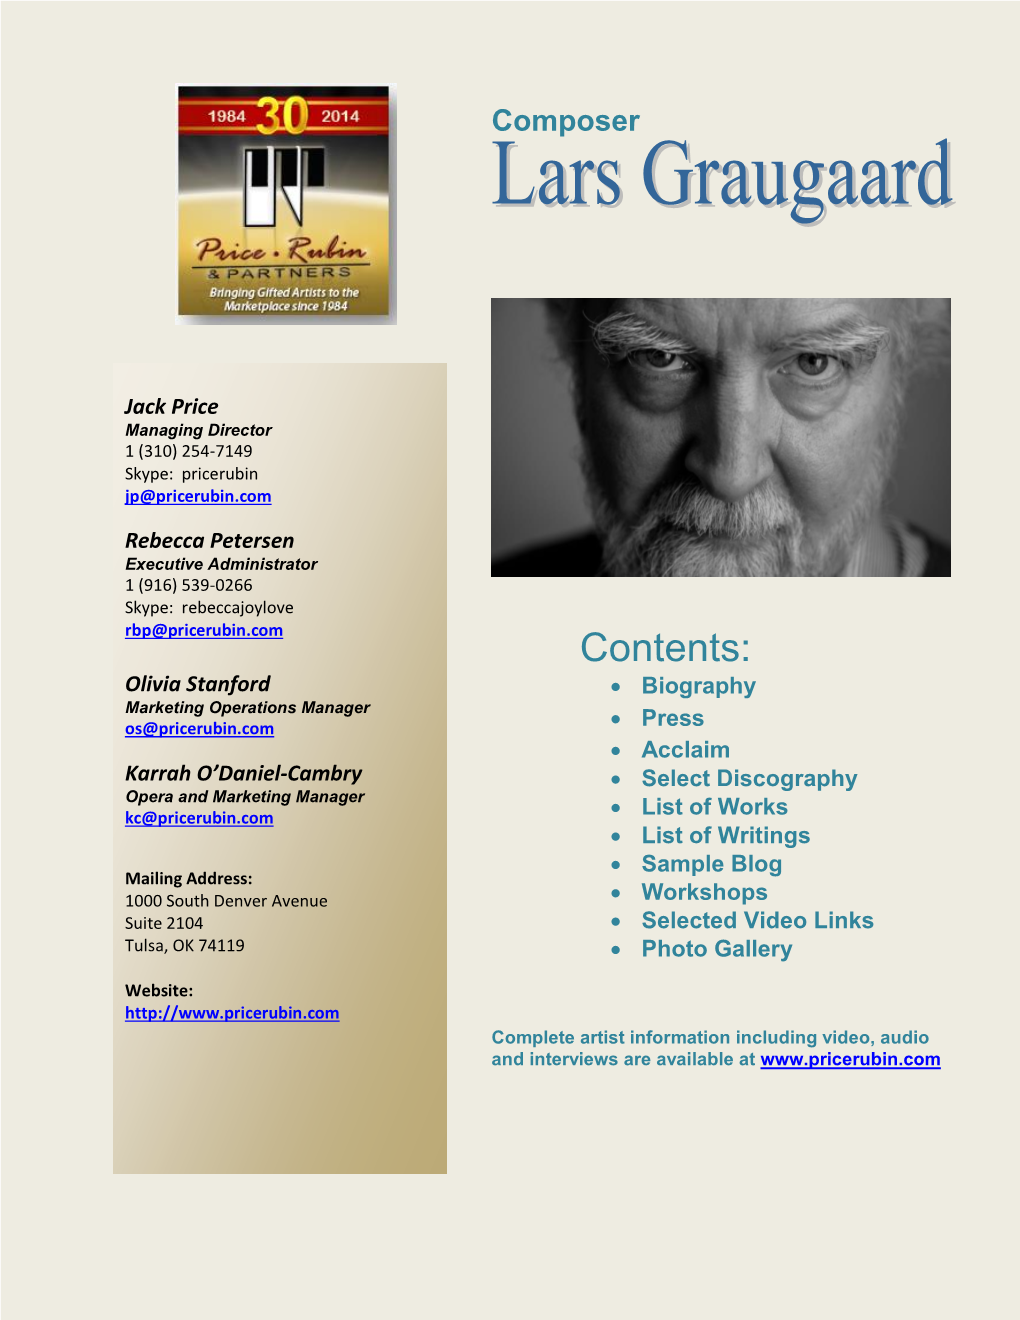 Lars Graugaard – Select Discography